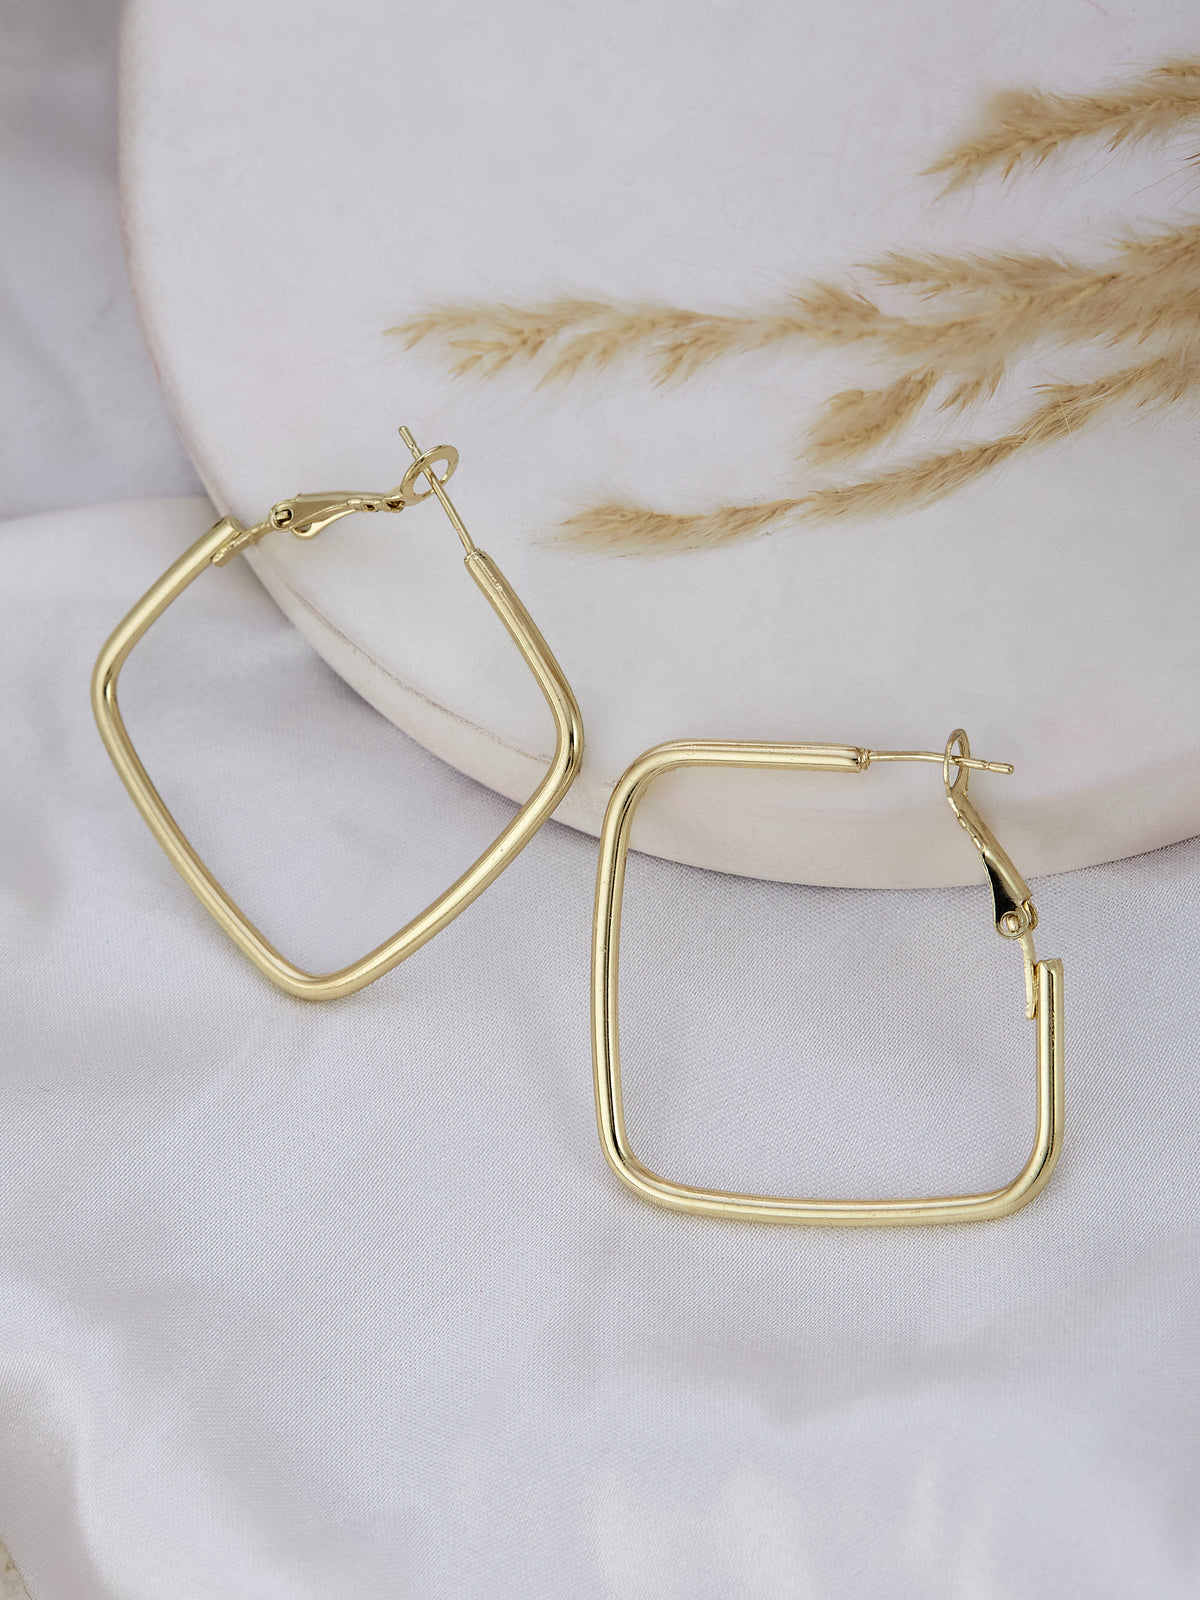 Stylish Gold Hoop Earrings for women & girls